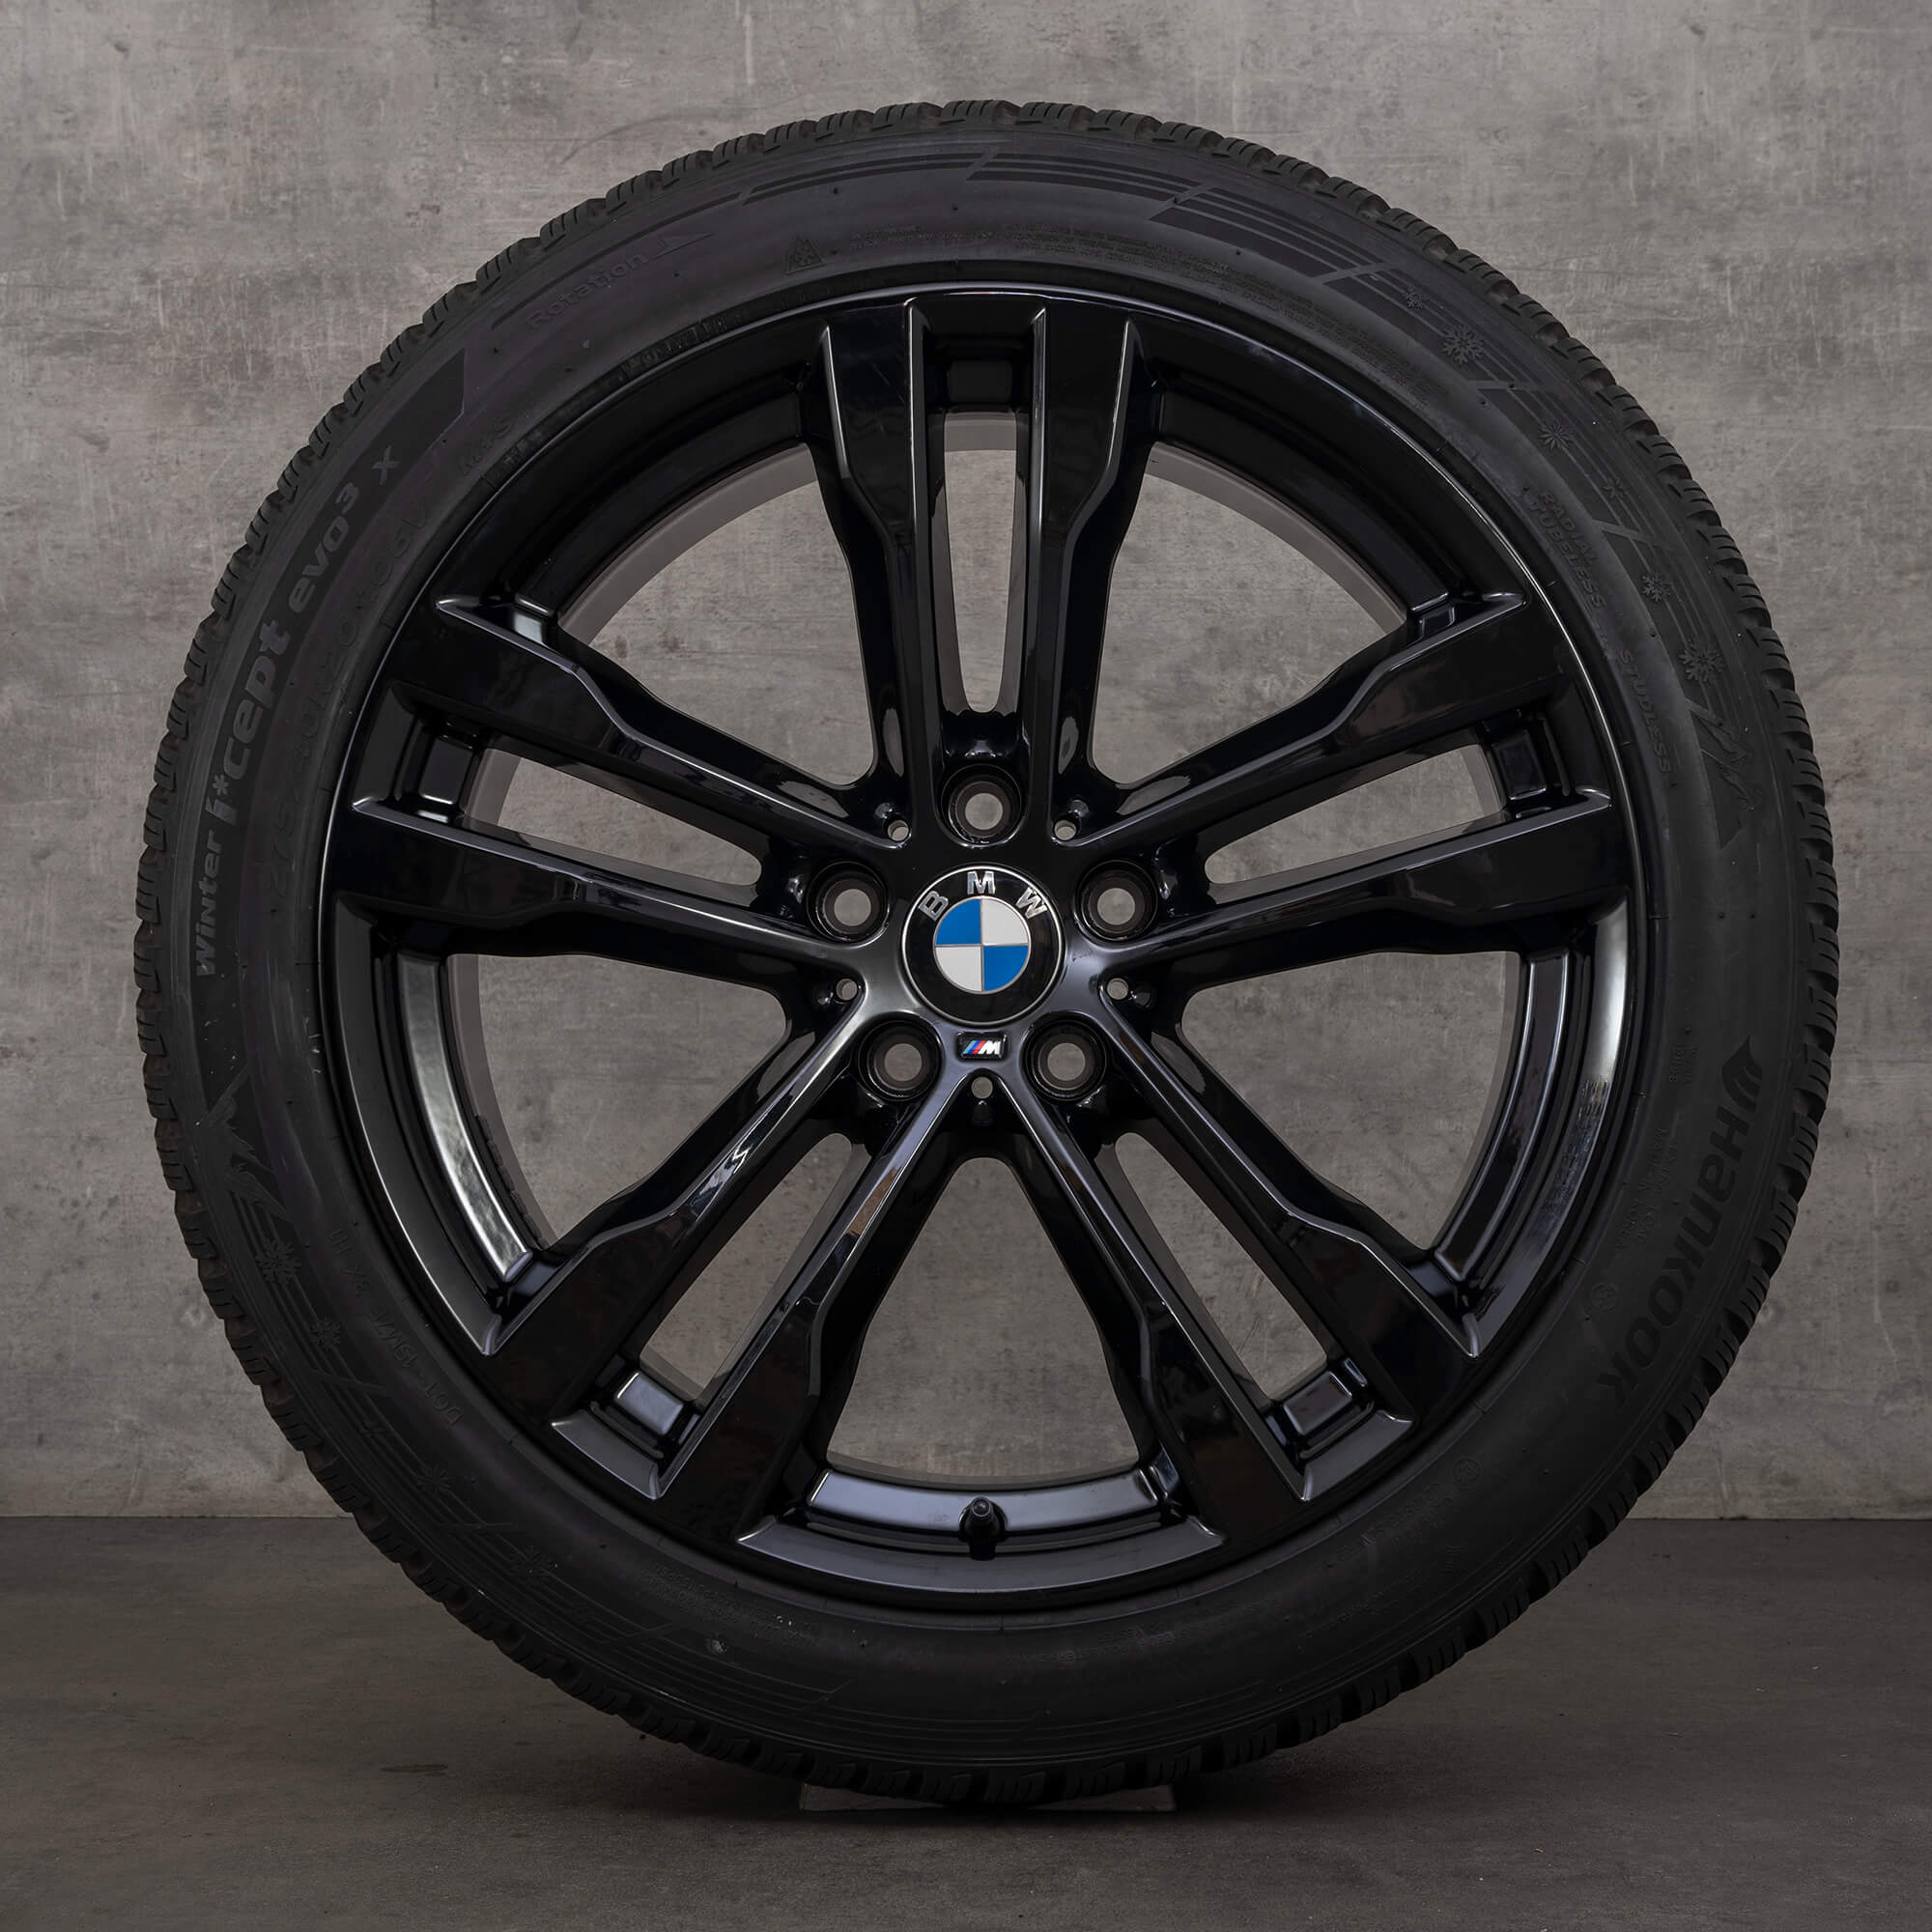 BMW X5 E70 F15 X6 F16 kompletni zimni alu kola 20 palcové pneumatiky ráfky 468 M